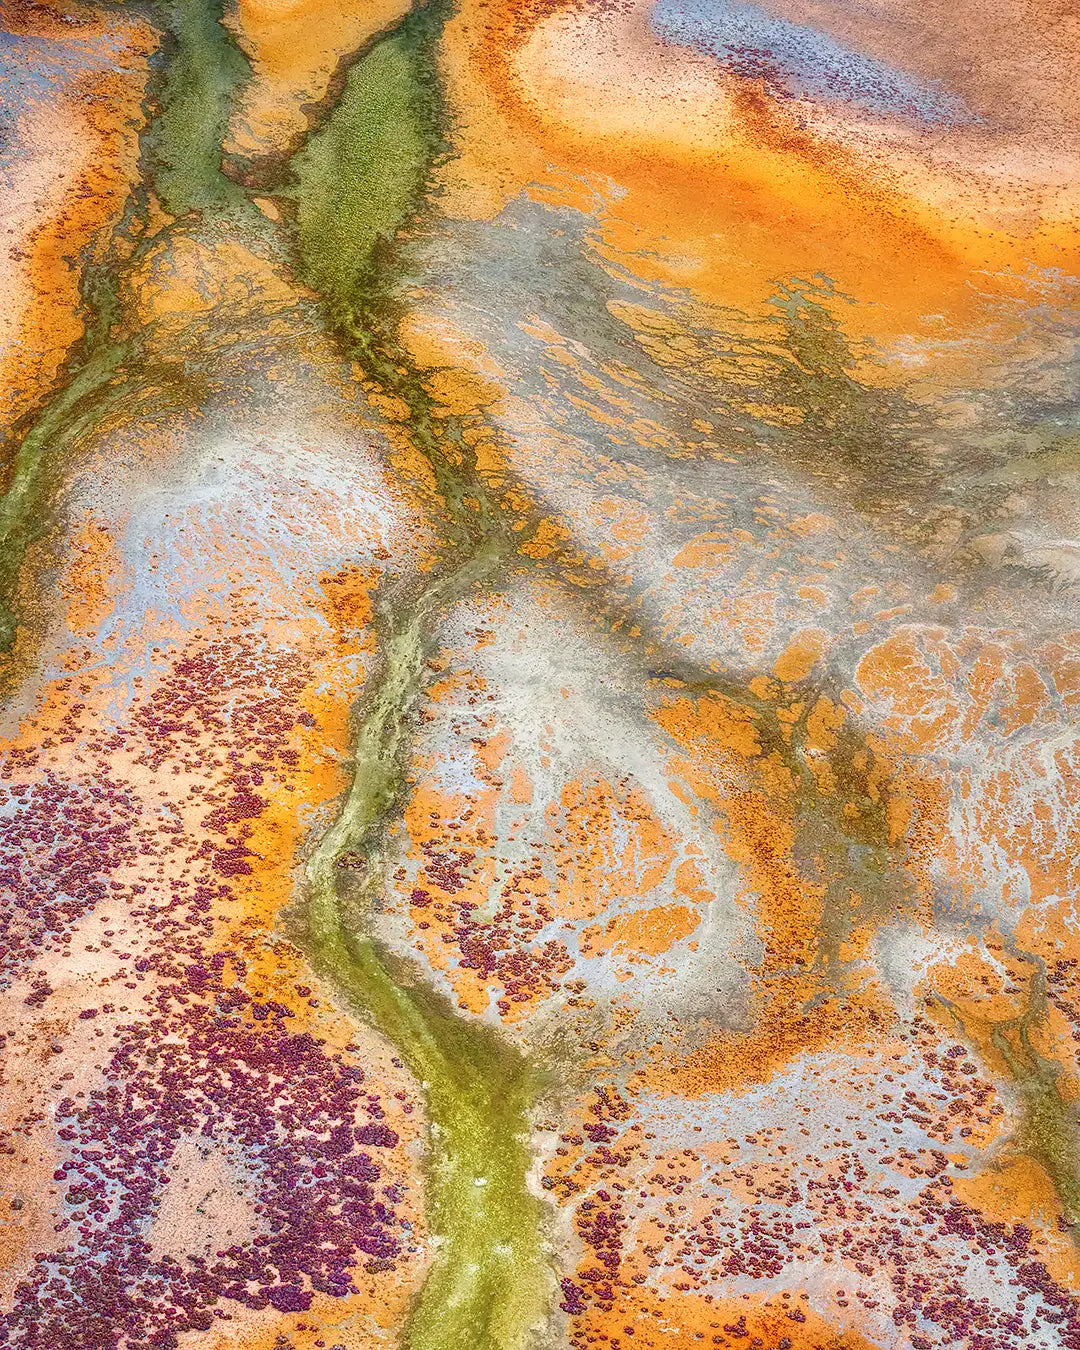 Collision - Tidal patterns, Roebuck Plains, The Kimberley, Western Australia